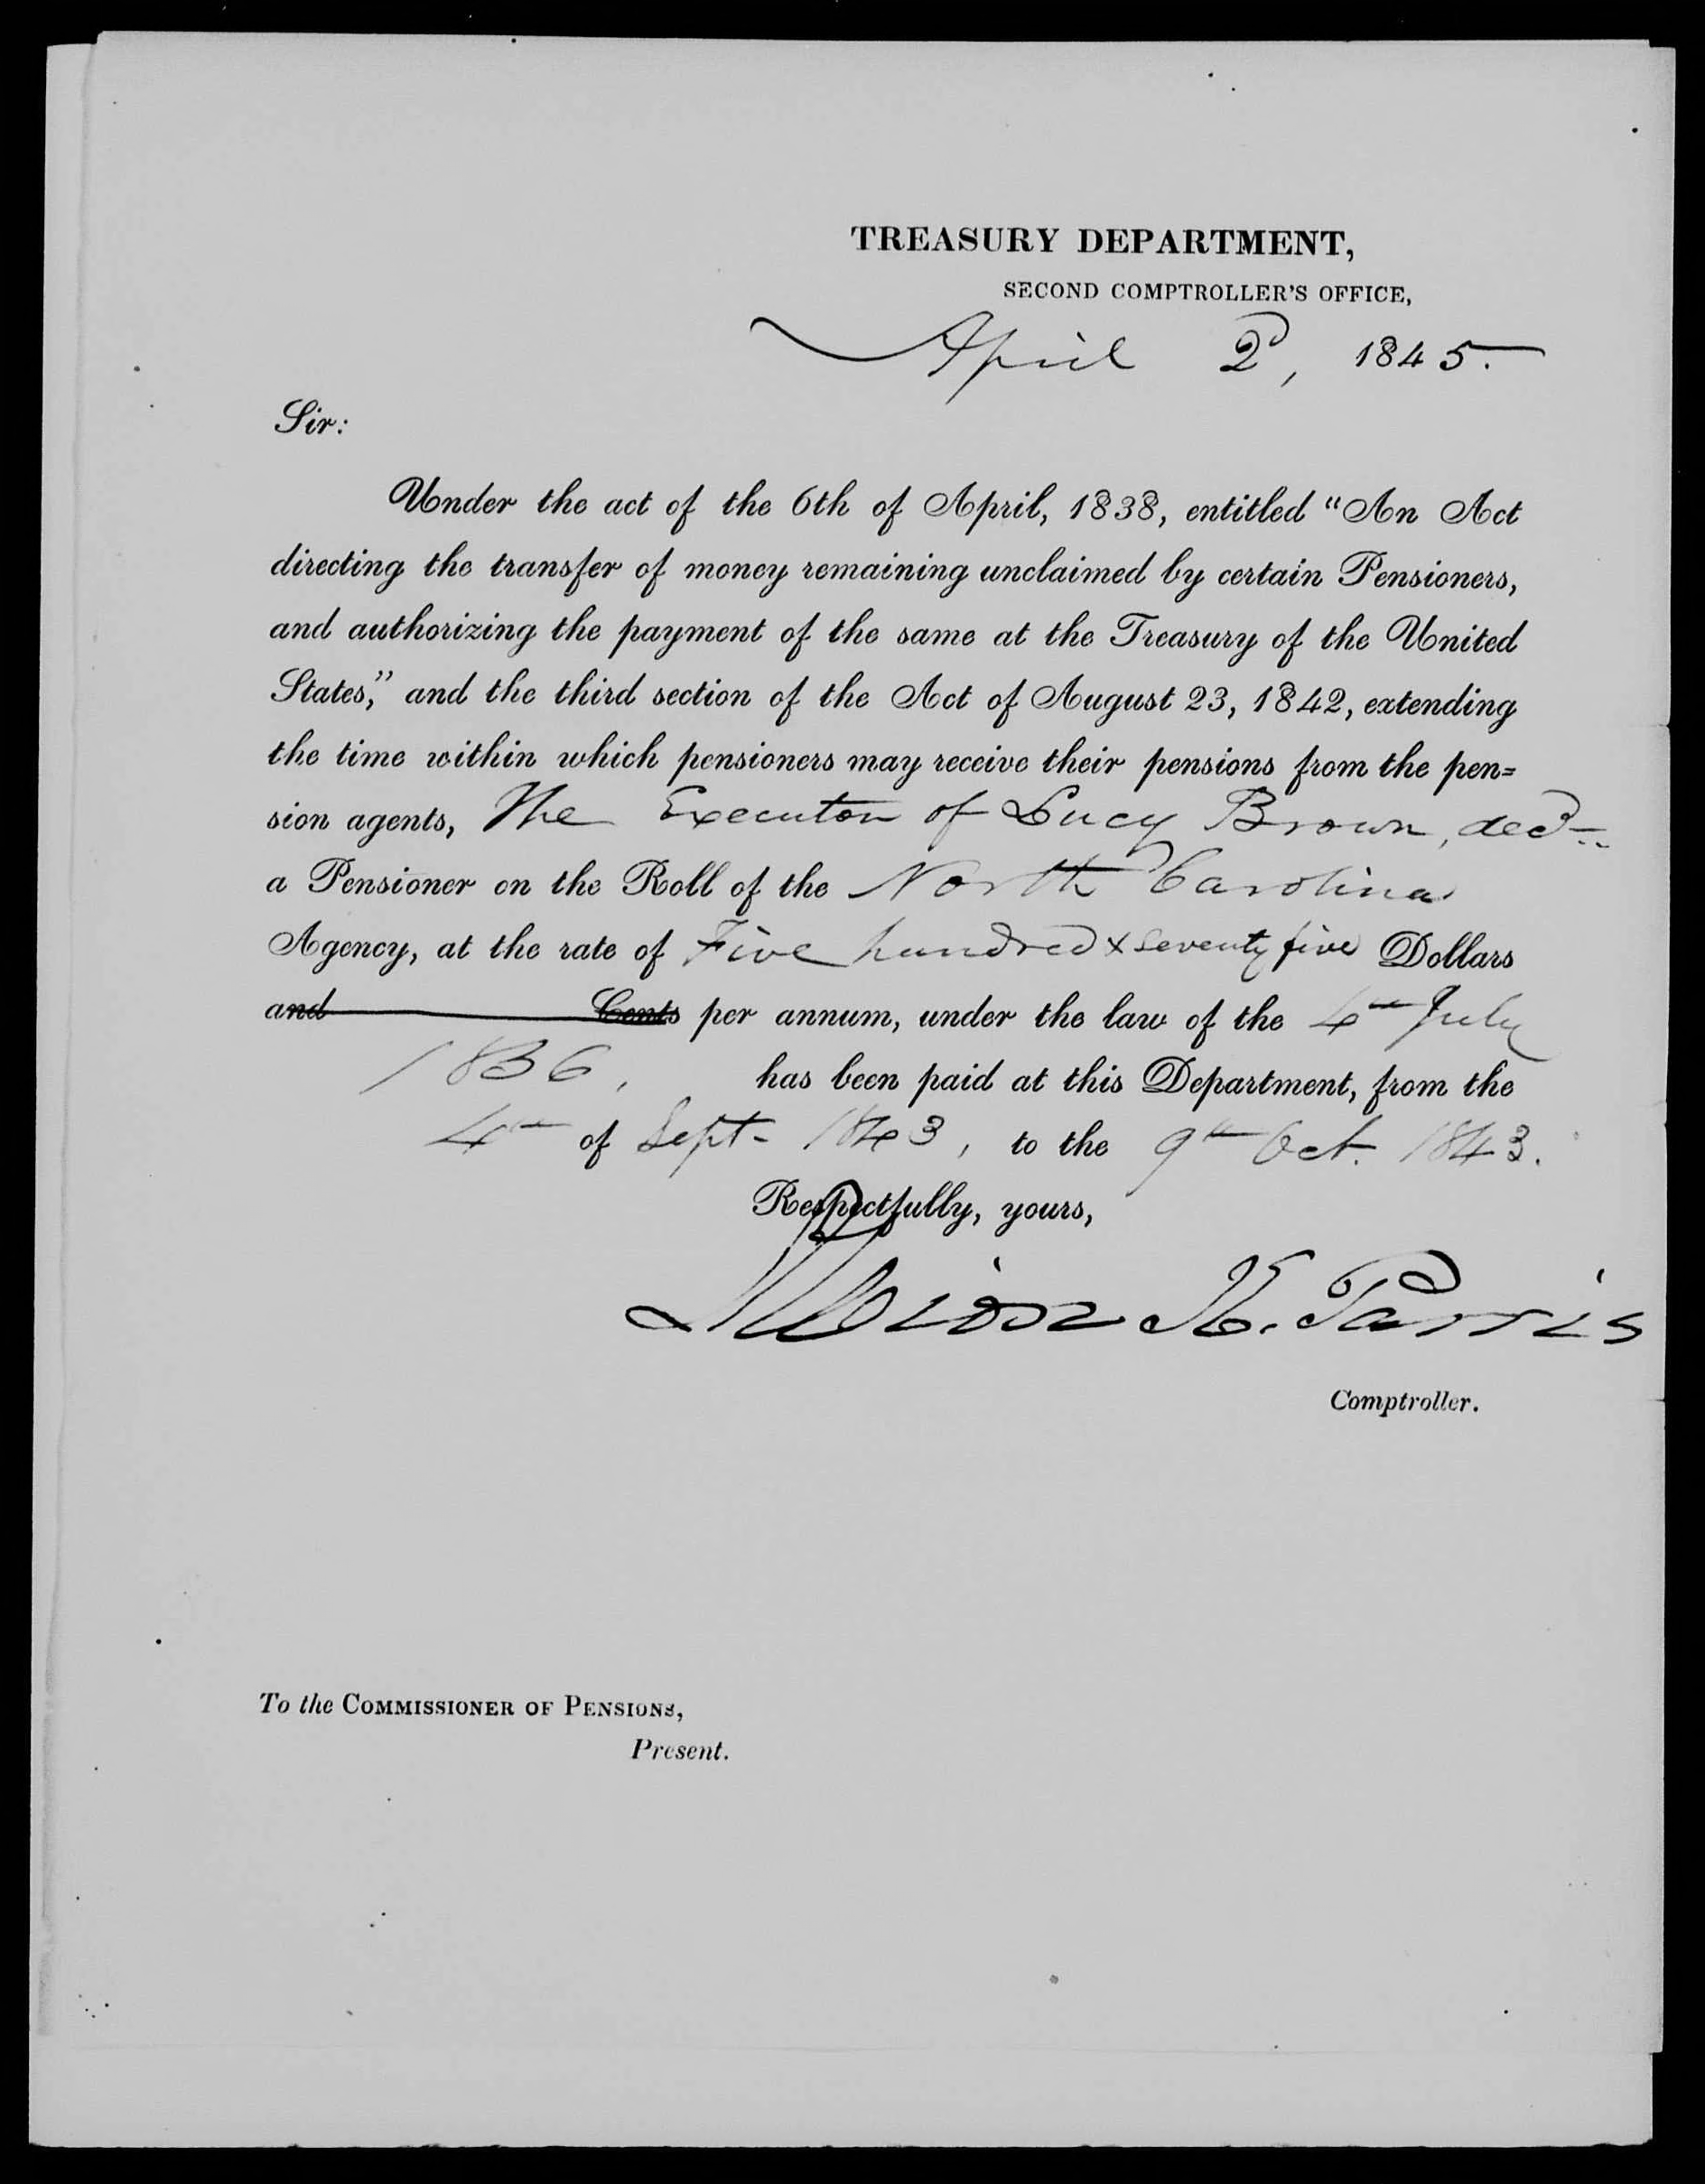 Letter from Albion K. Parris to James L. Edwards, 2 April 1845